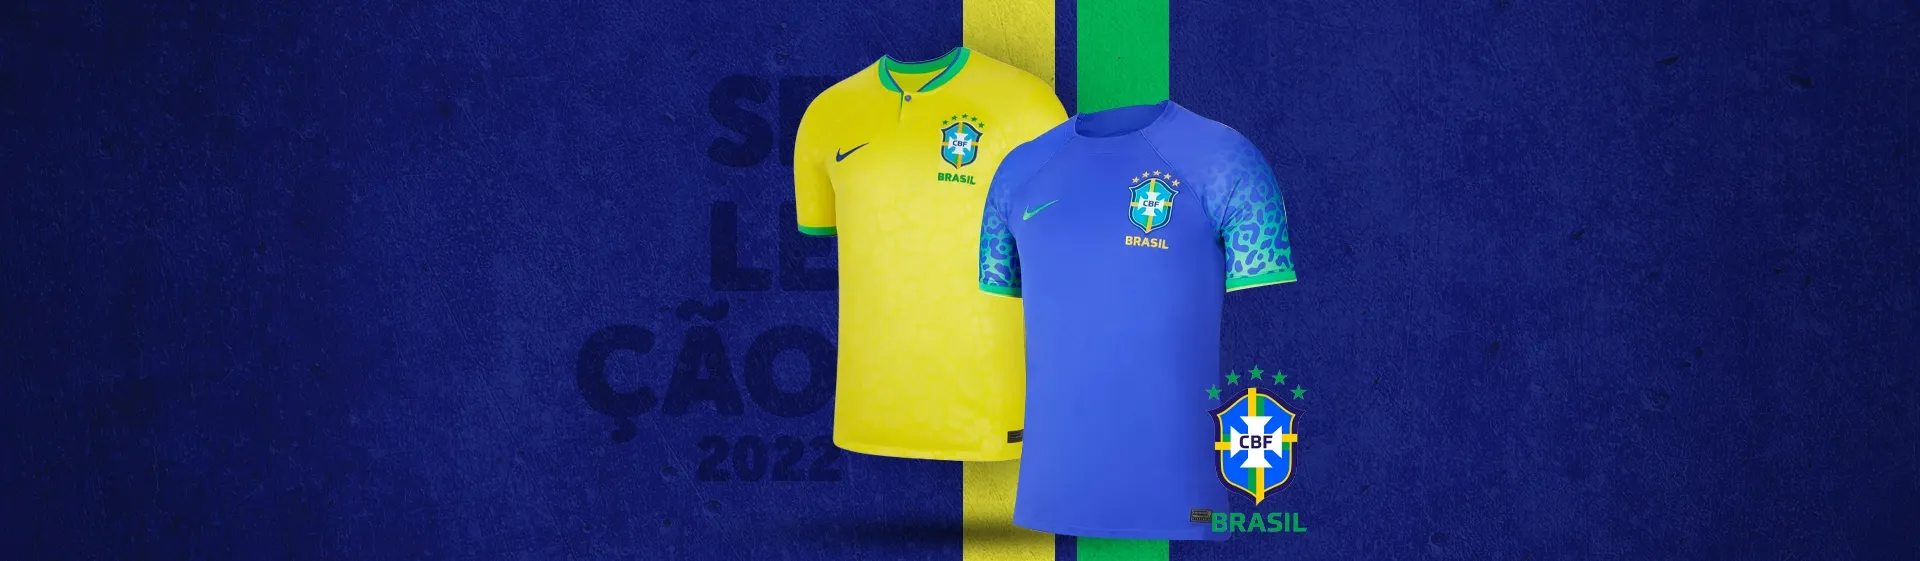 Capa do post: Camisa do Brasil: conheça os modelos para se preparar para a Copa 2022